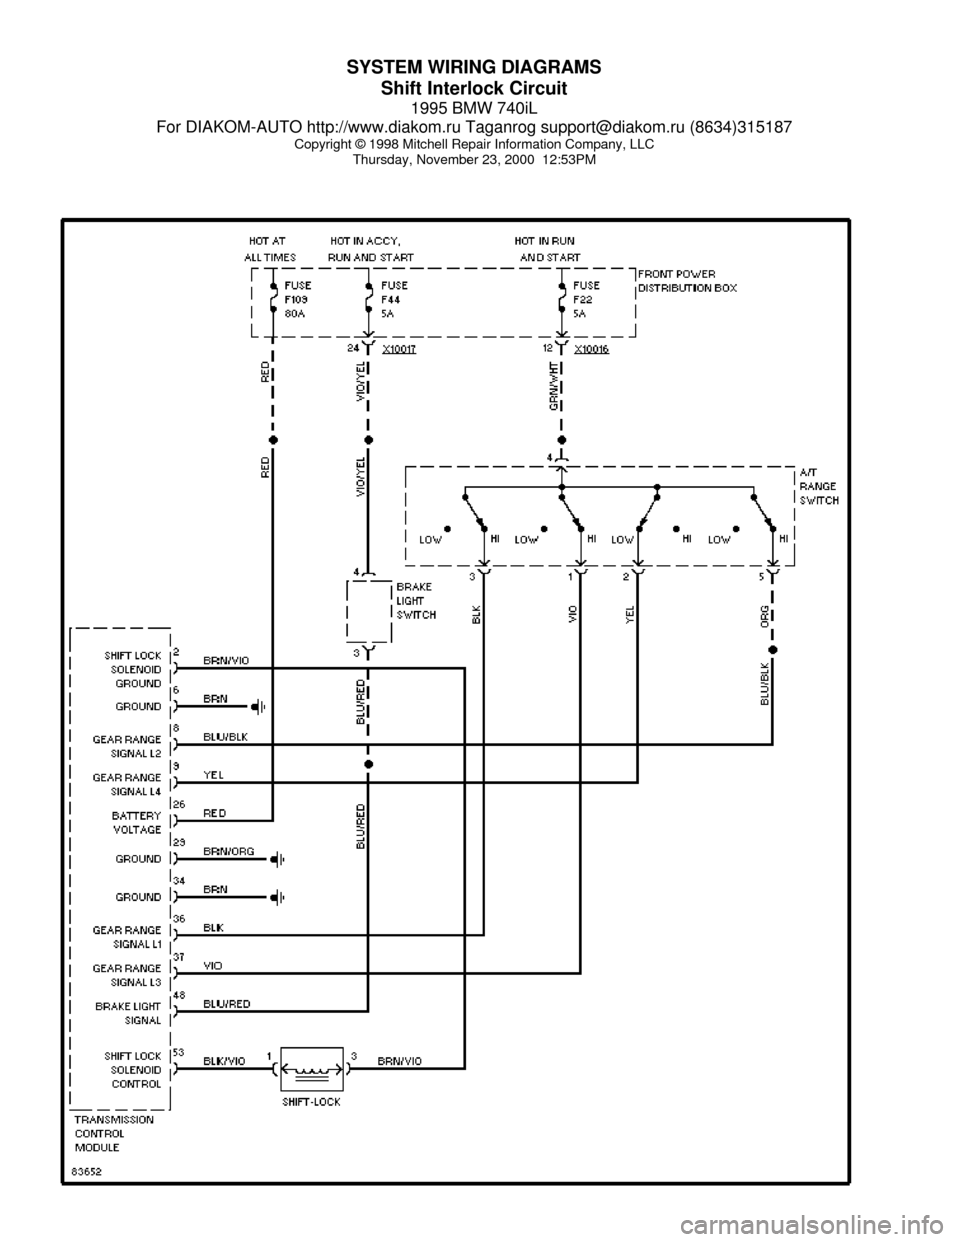 BMW 740il 1995 E38 System Wiring Diagrams SYSTEM WIRING DIAGRAMS
Shift Interlock Circuit
1995 BMW 740iL
For DIAKOM-AUTO http://www.diakom.ru Taganrog support@diakom.ru (8634)315187
Copyright © 1998 Mitchell Repair Information Company, LLC
Th